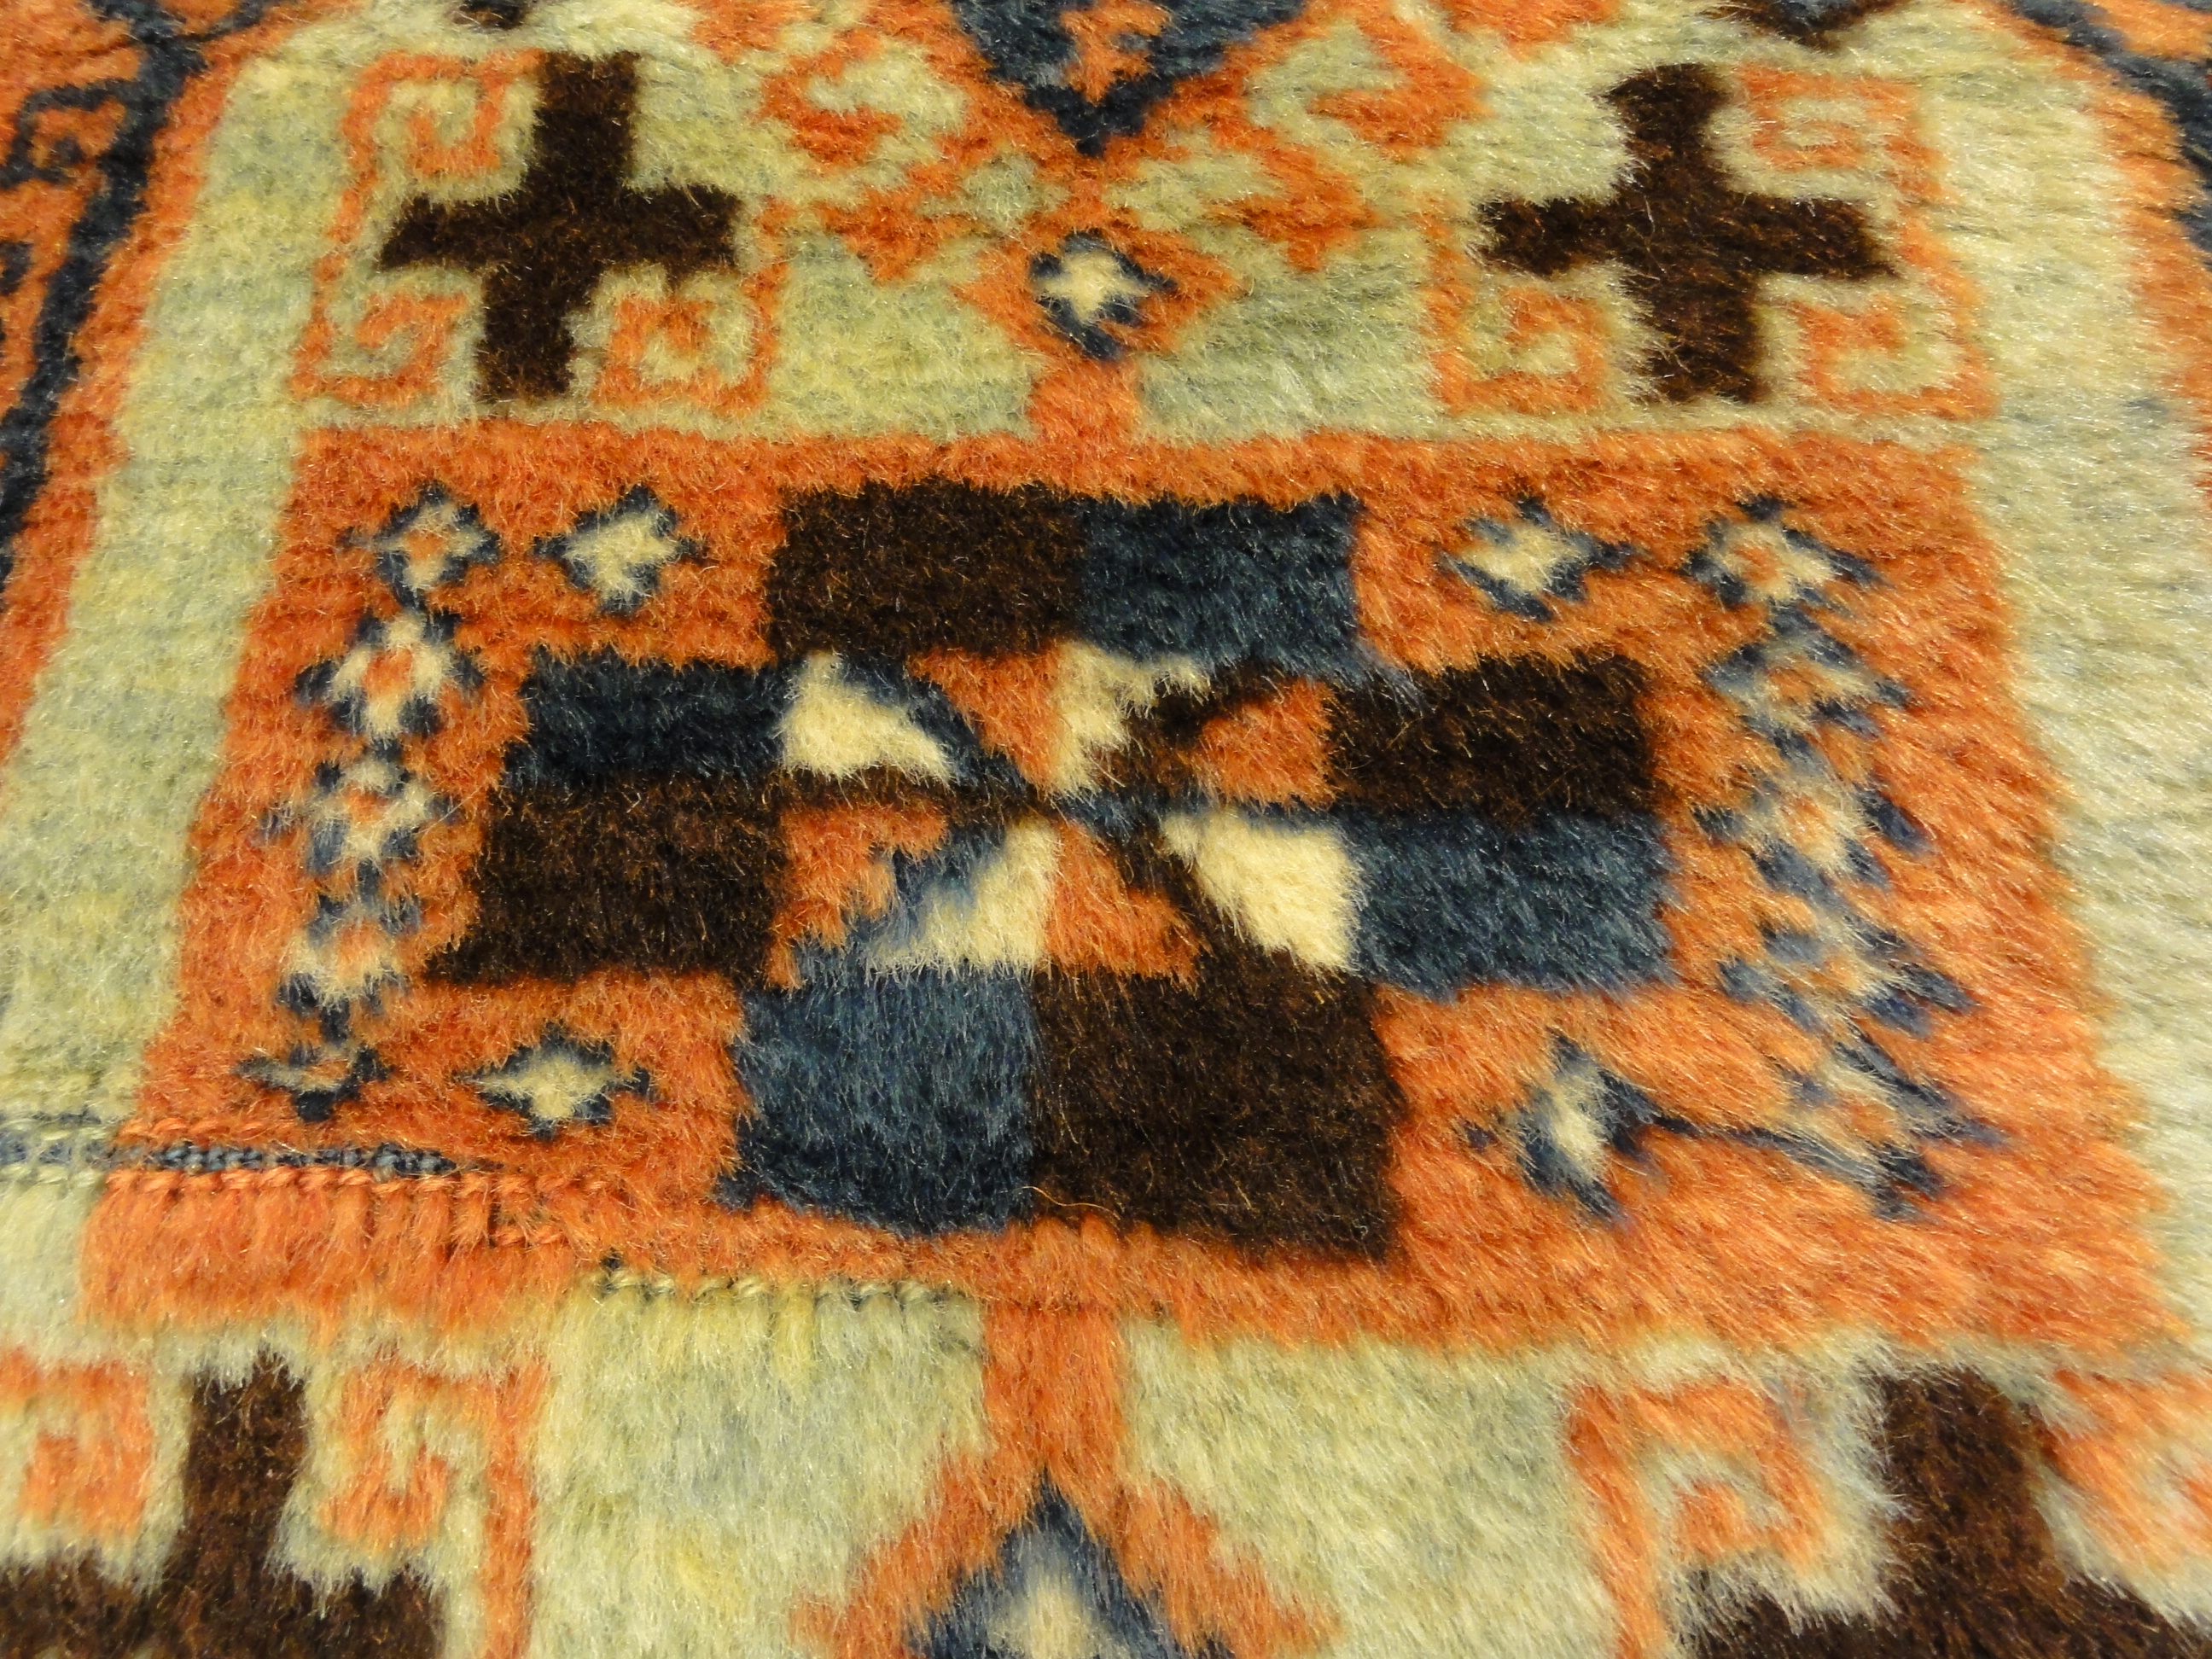 Antique Turkish Yastik ca 1900. A piece of genuine woven carpet art sold at Santa Barbara Design Center, Rugs and More in Santa Barbara, California.